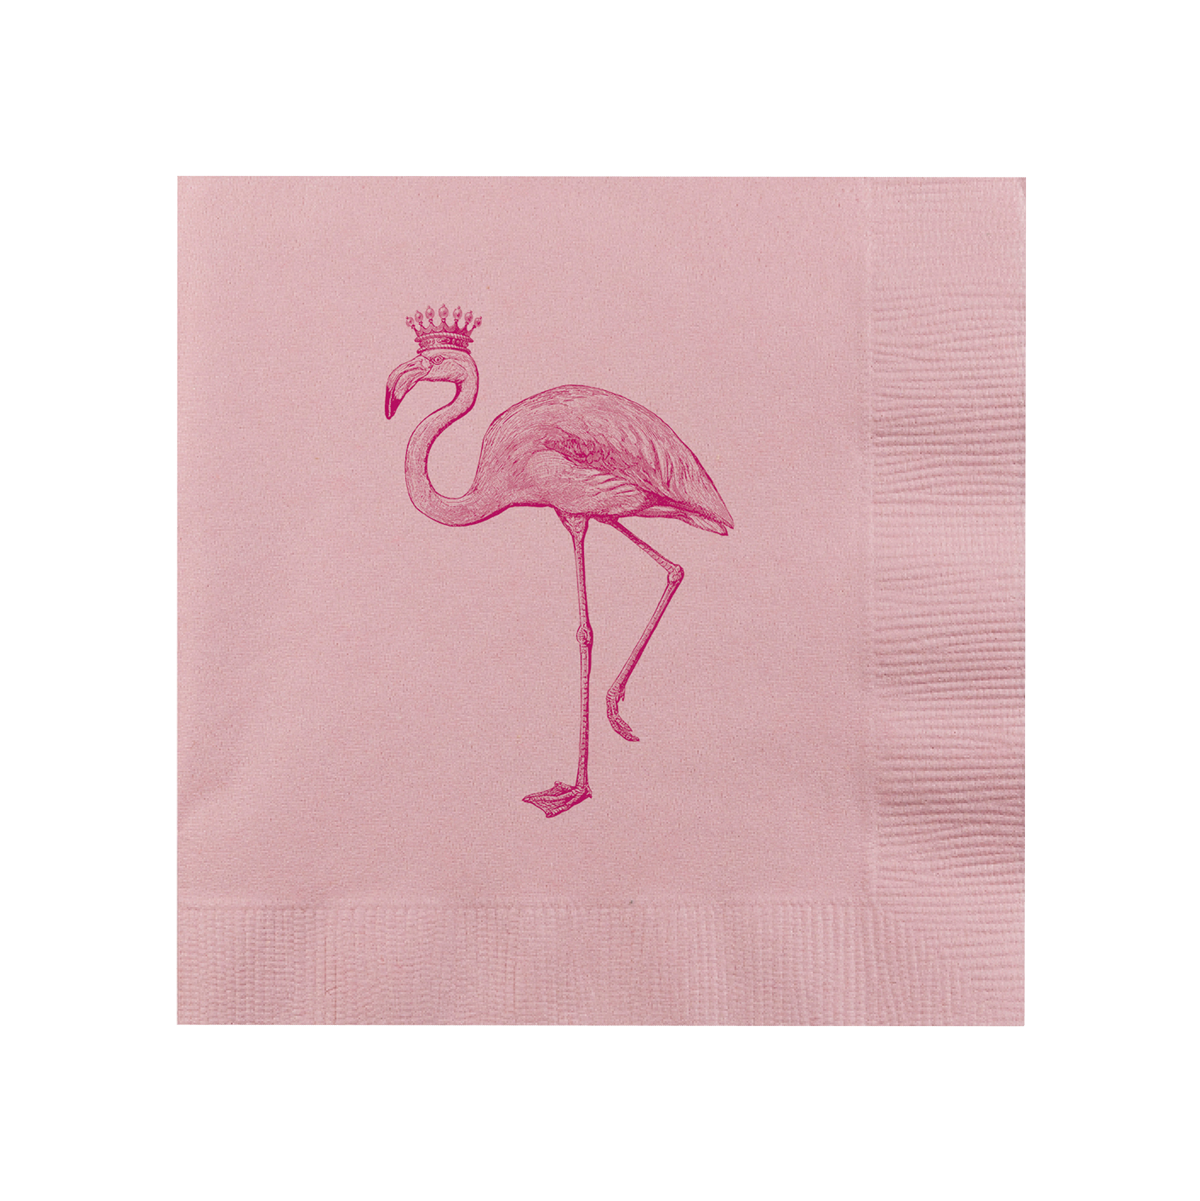 Alexa Pulitzer - Royal Flamingo Beverage Napkins - PINK